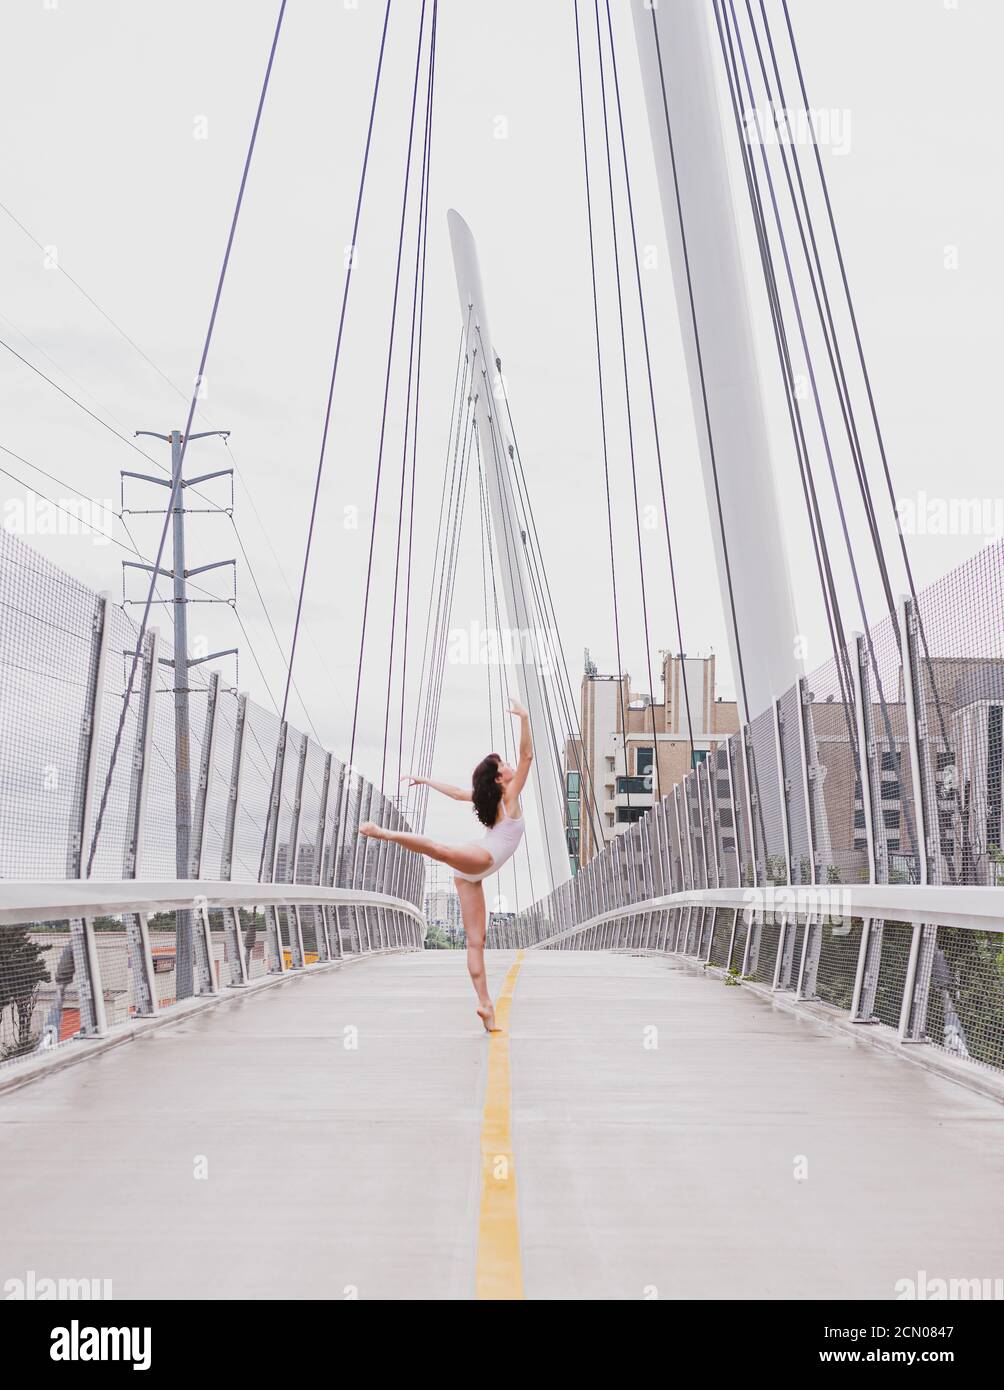 Ballerina on Suspension Bridge Stock Photo - Alamy